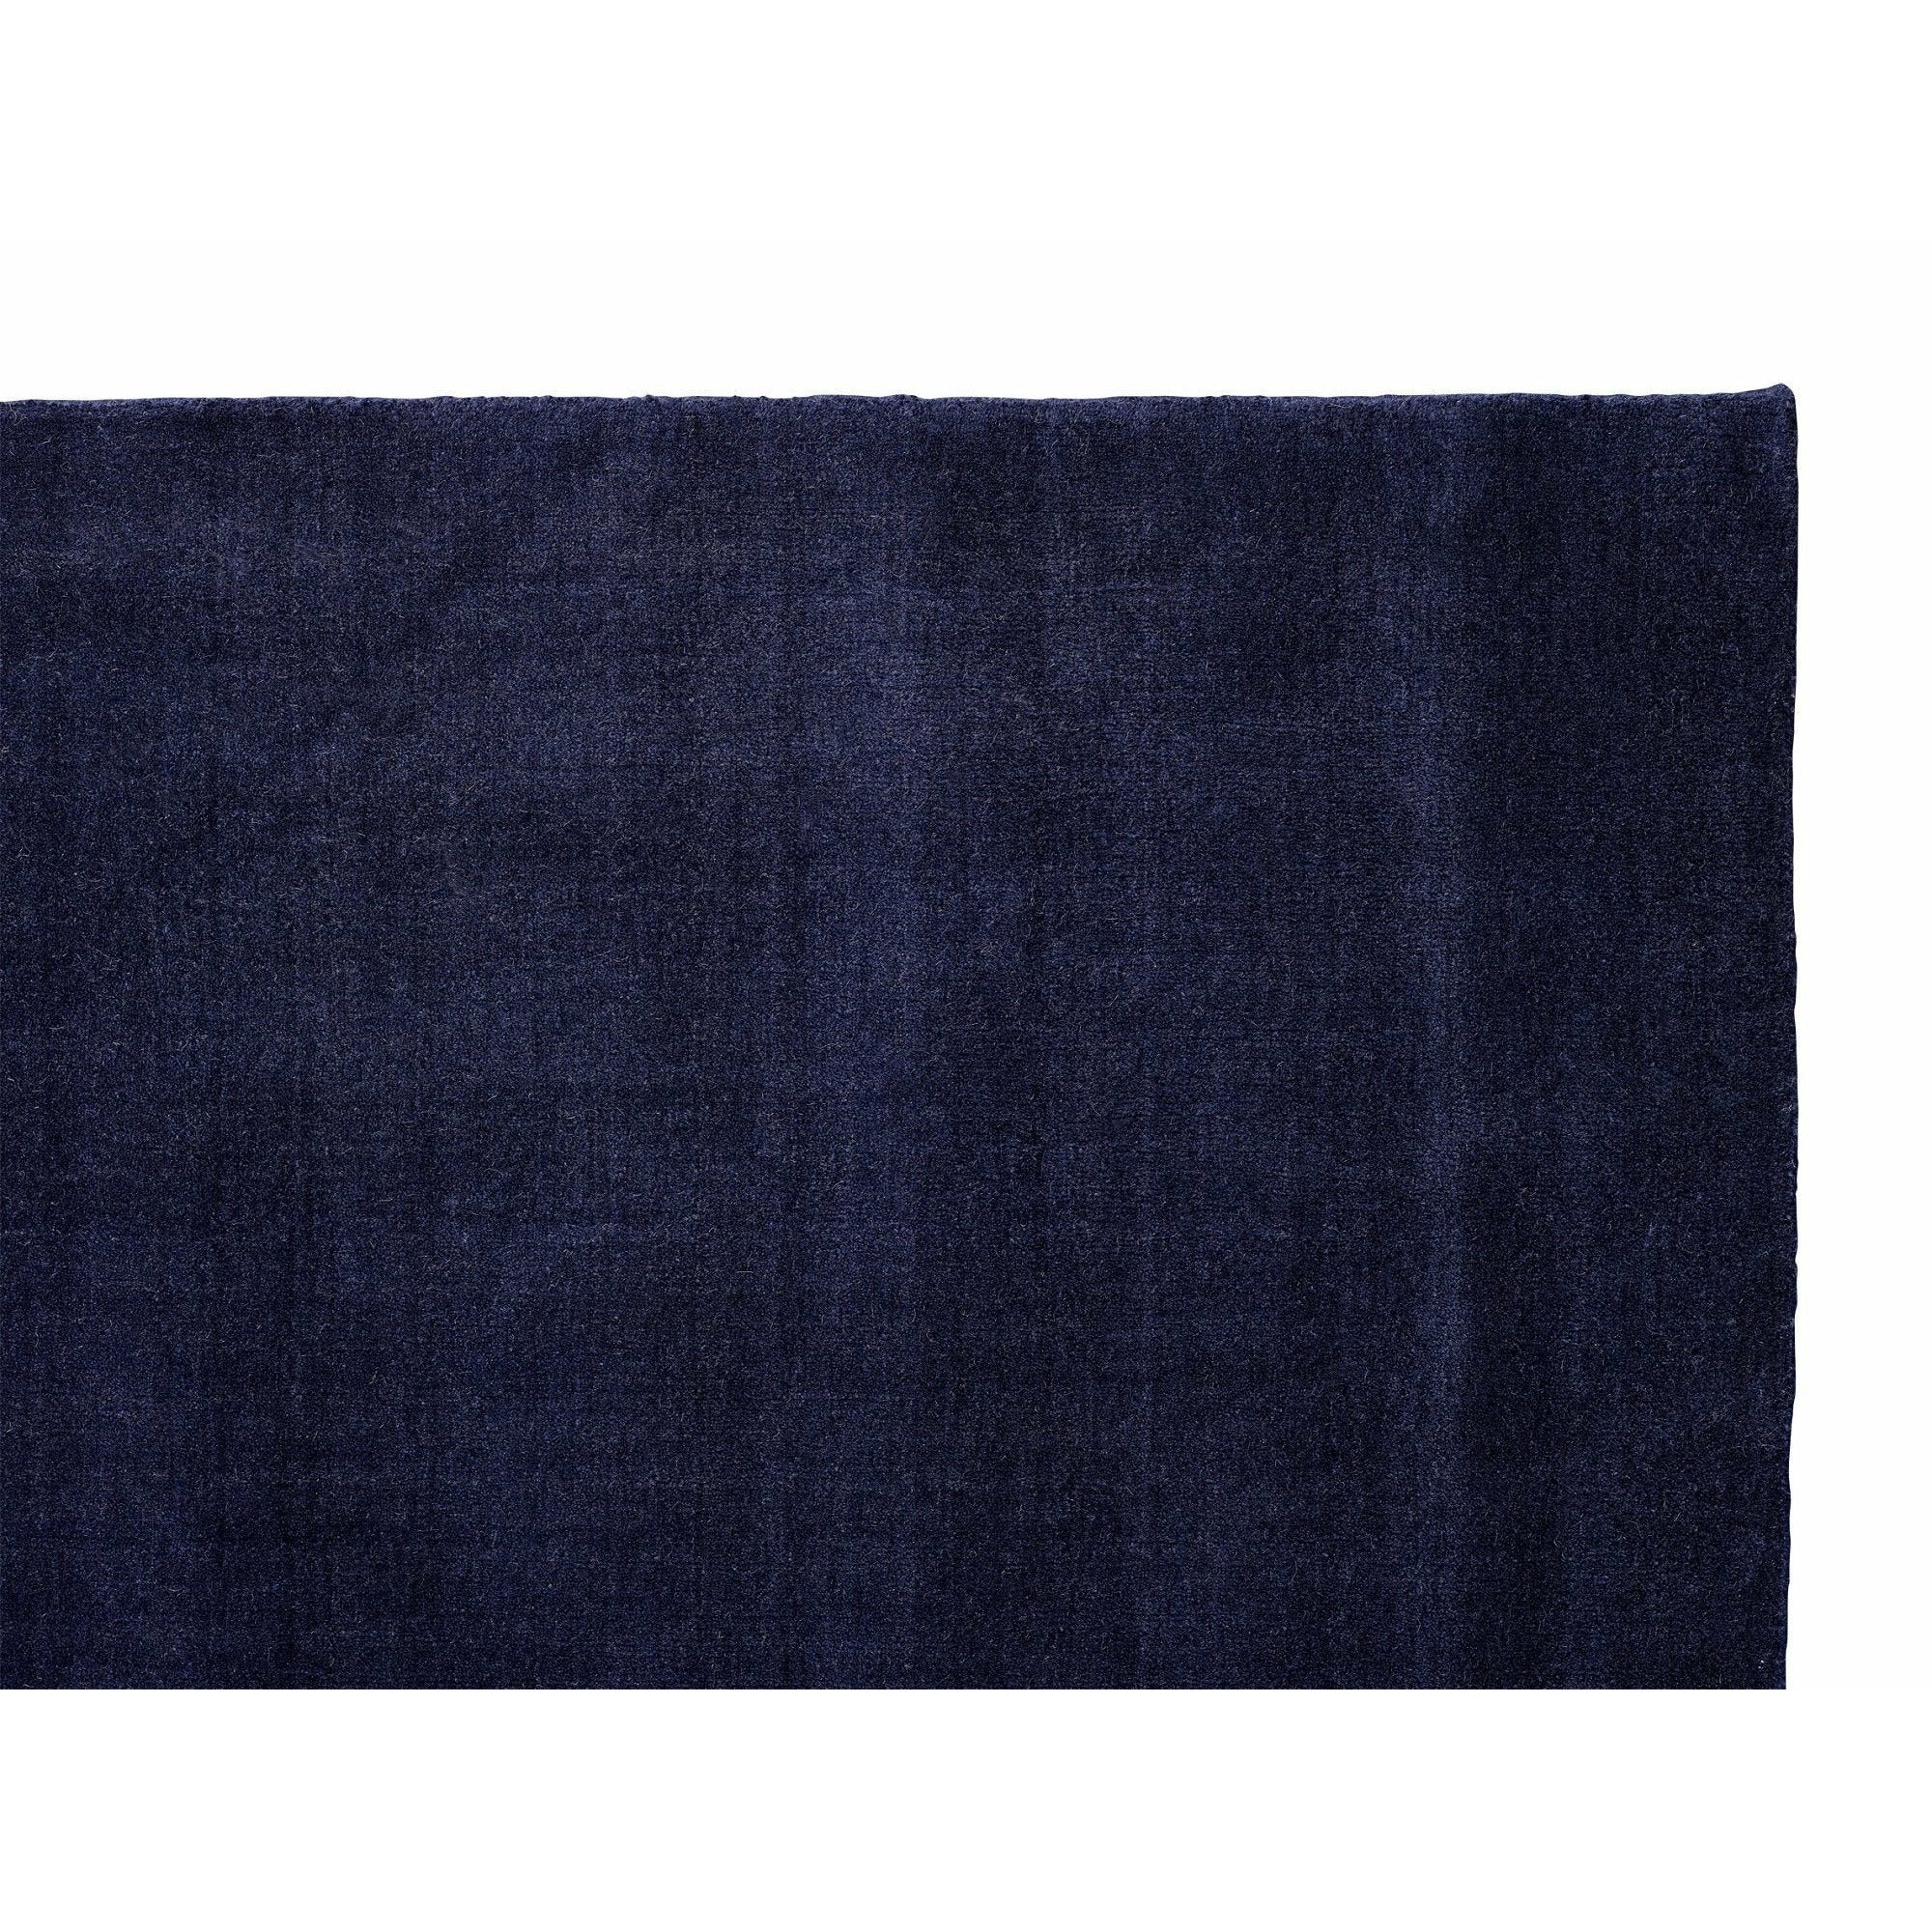 Massimo Erde Bambus Teppich Vibrant Blau, 170x240 Cm